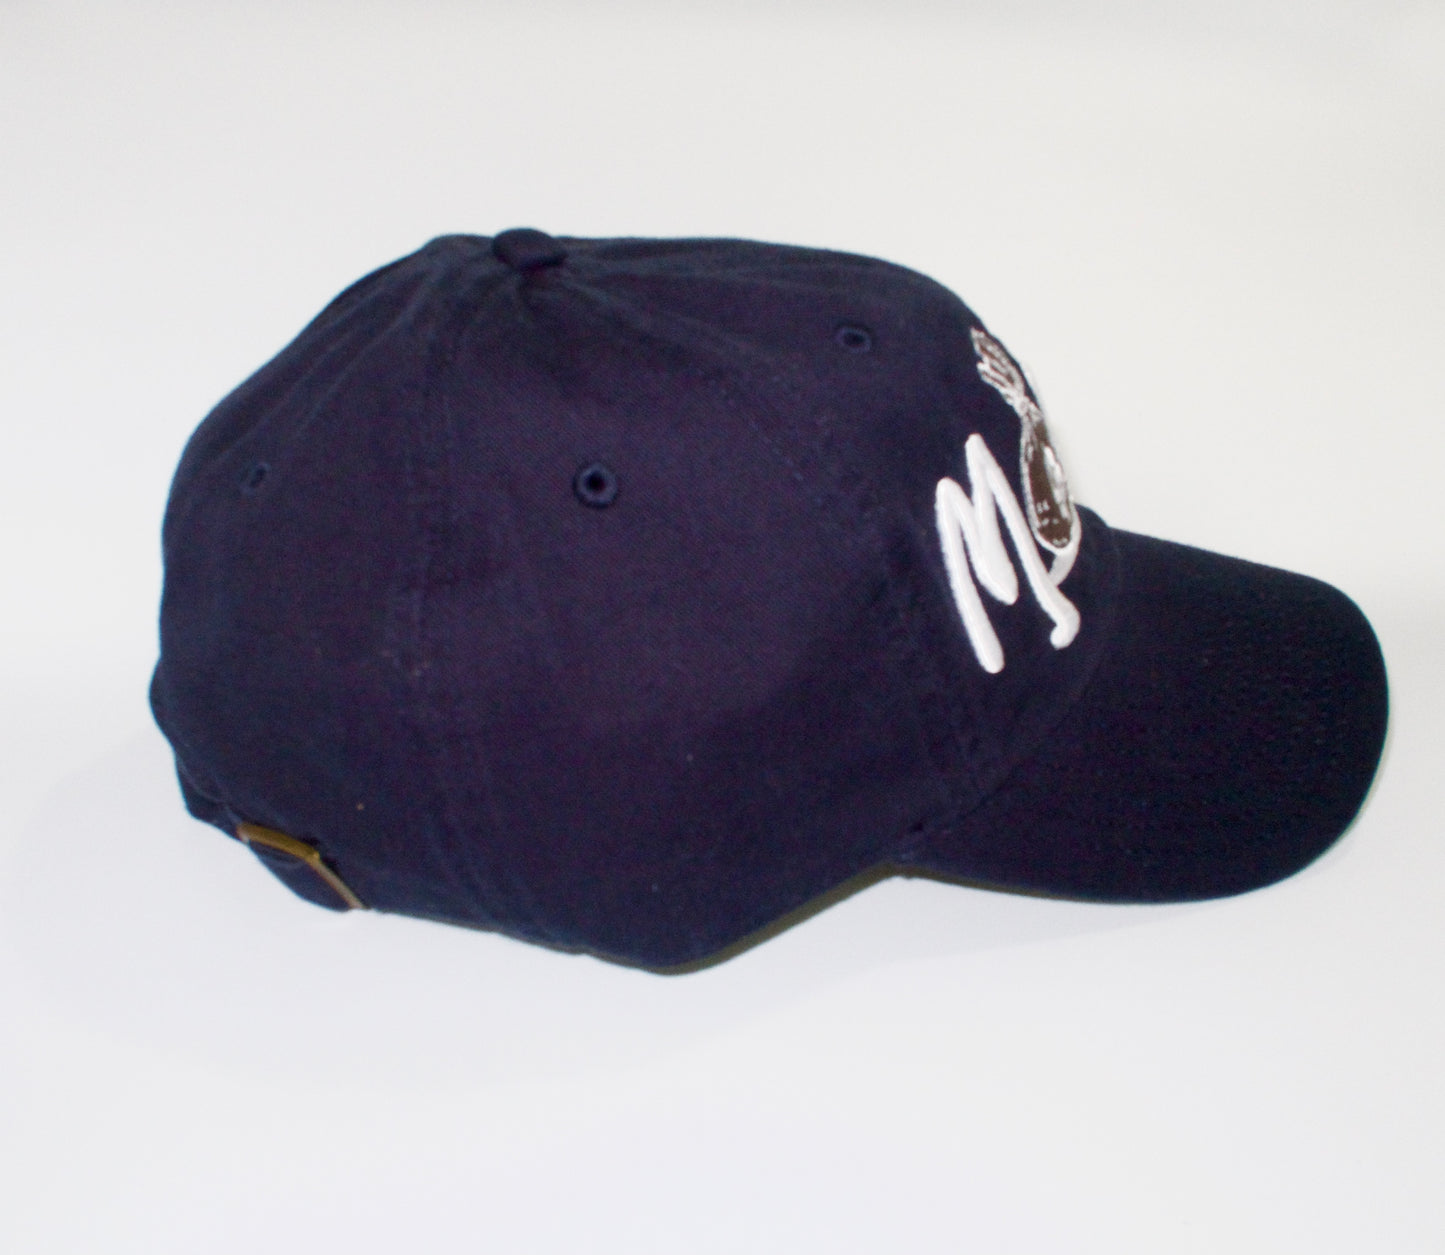 The Navy Money Hat